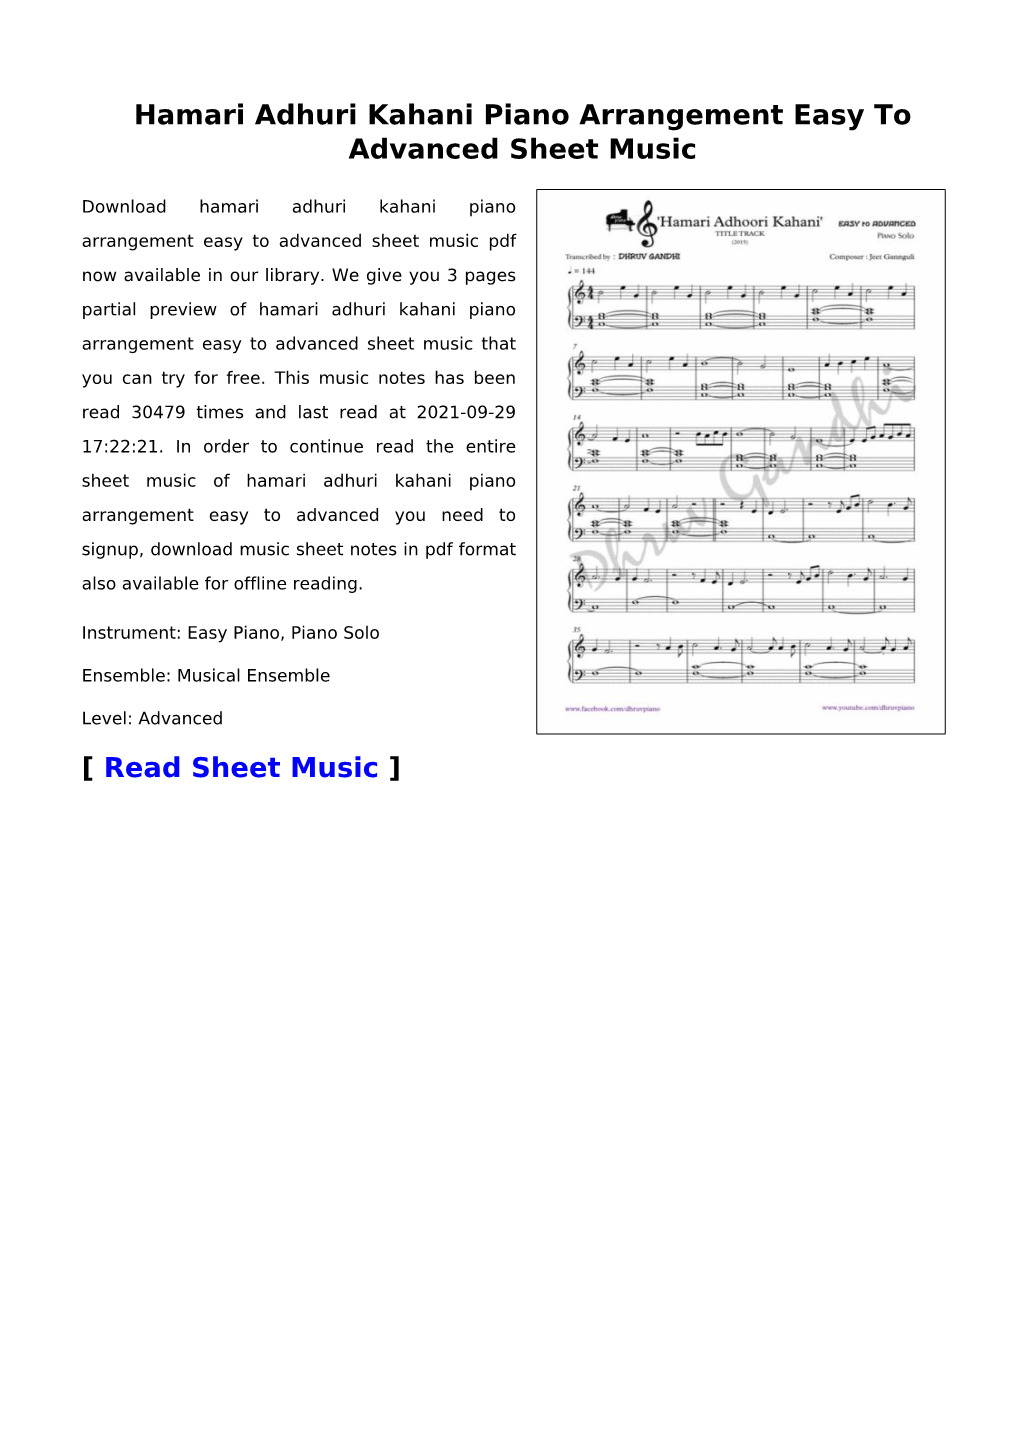 Hamari Adhuri Kahani Piano Arrangement Easy to Advanced Sheet Music